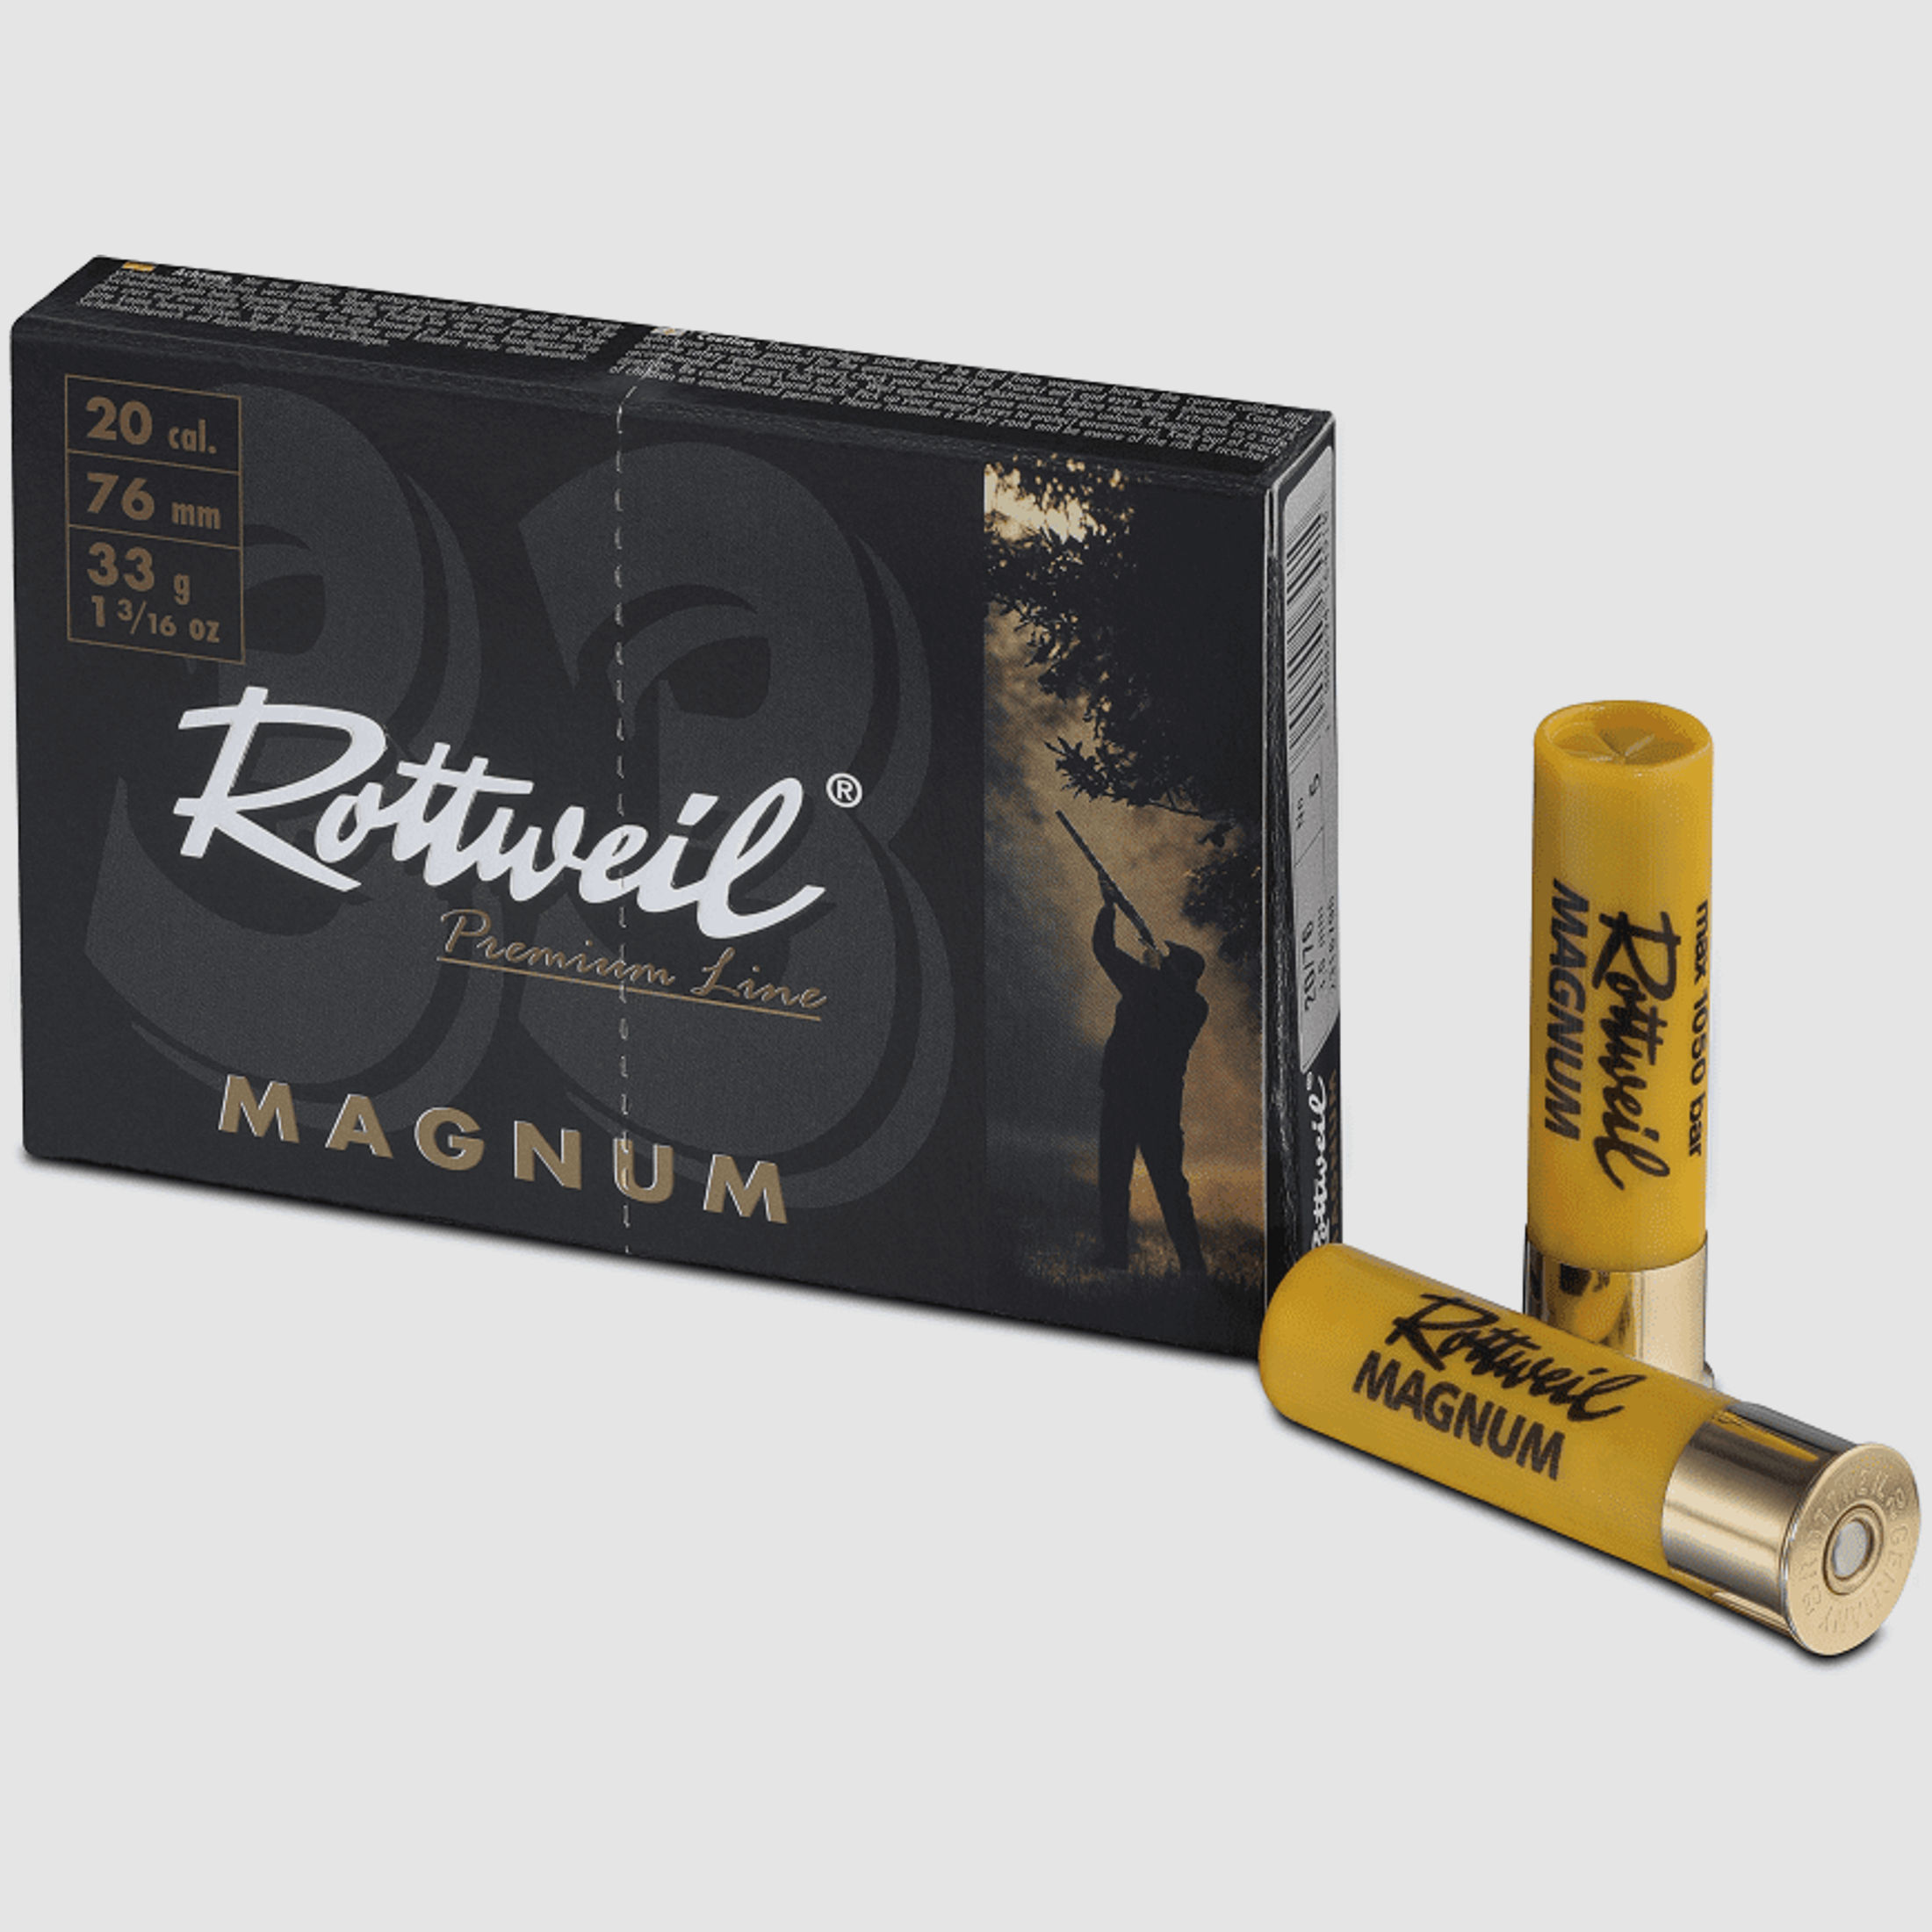 Rottweil Magnum 20/76 33g 3,2mm